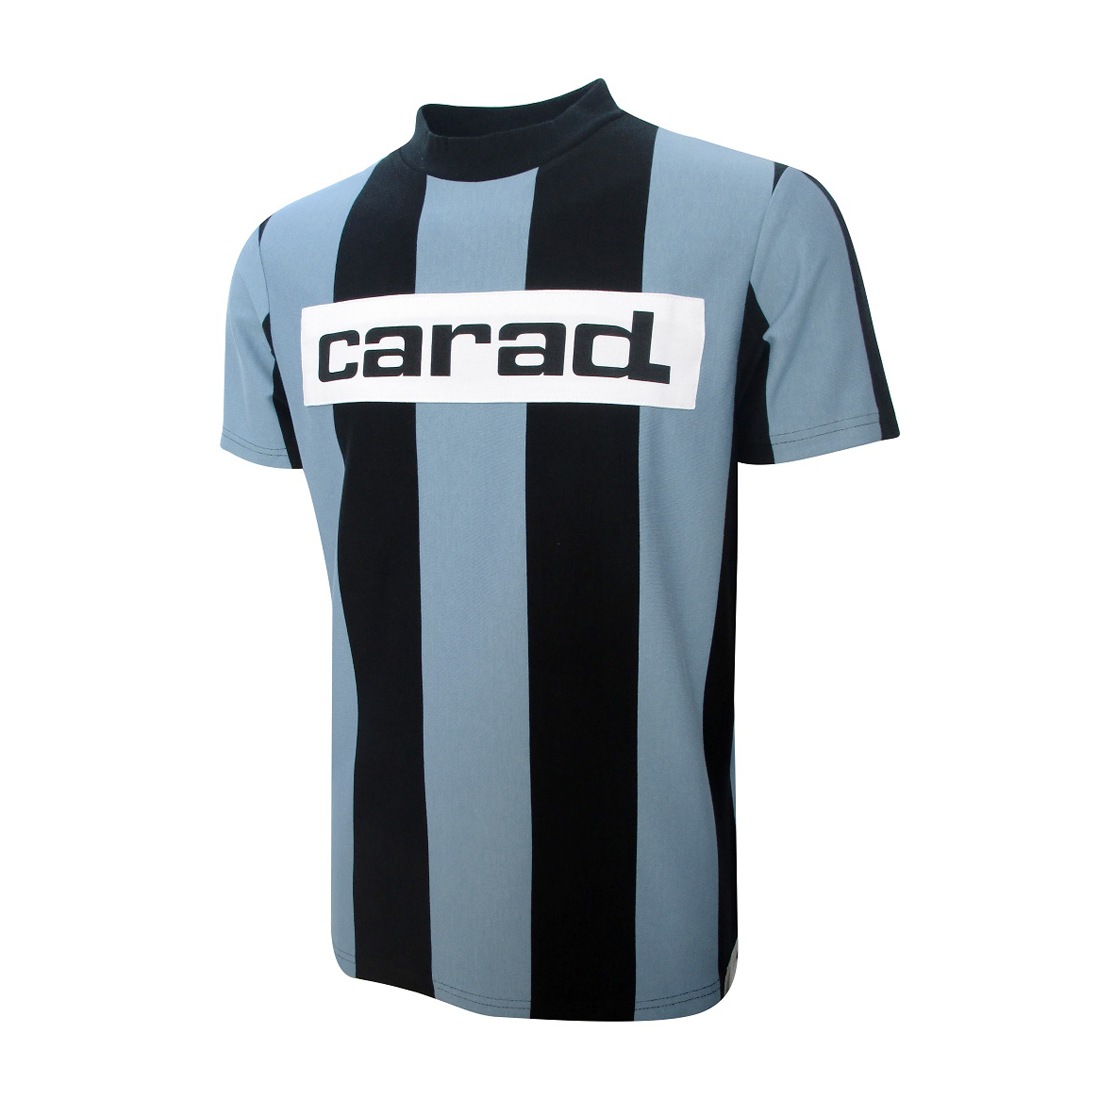 Club-Brugge-CARAD-shirt-1